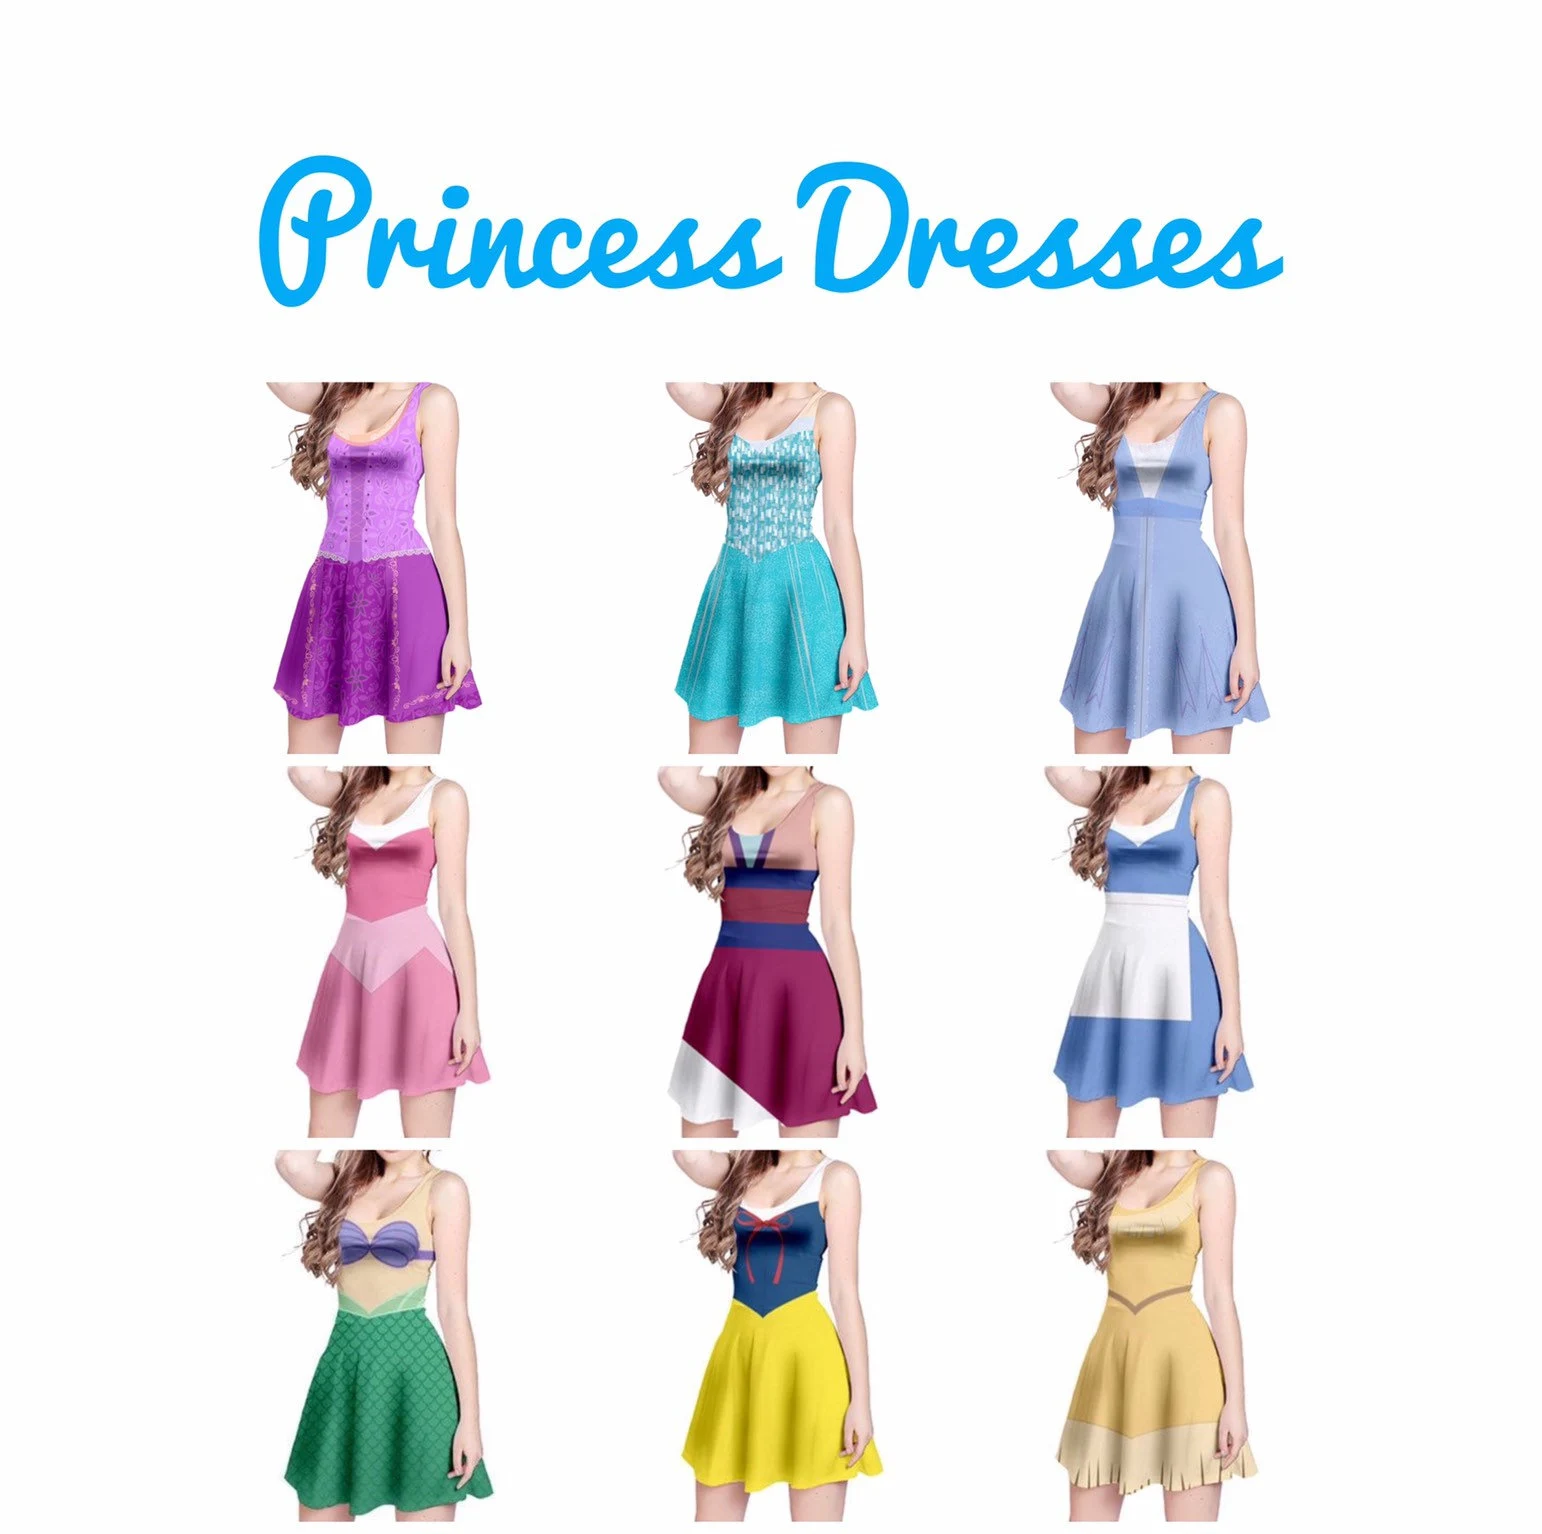 Adult Elsa dress - Frozen 2 dress - Frozen 2 Costume - woman Elsa Costume - Frozen Dress - Disney Princess - Elsa Dress - adult disney dress